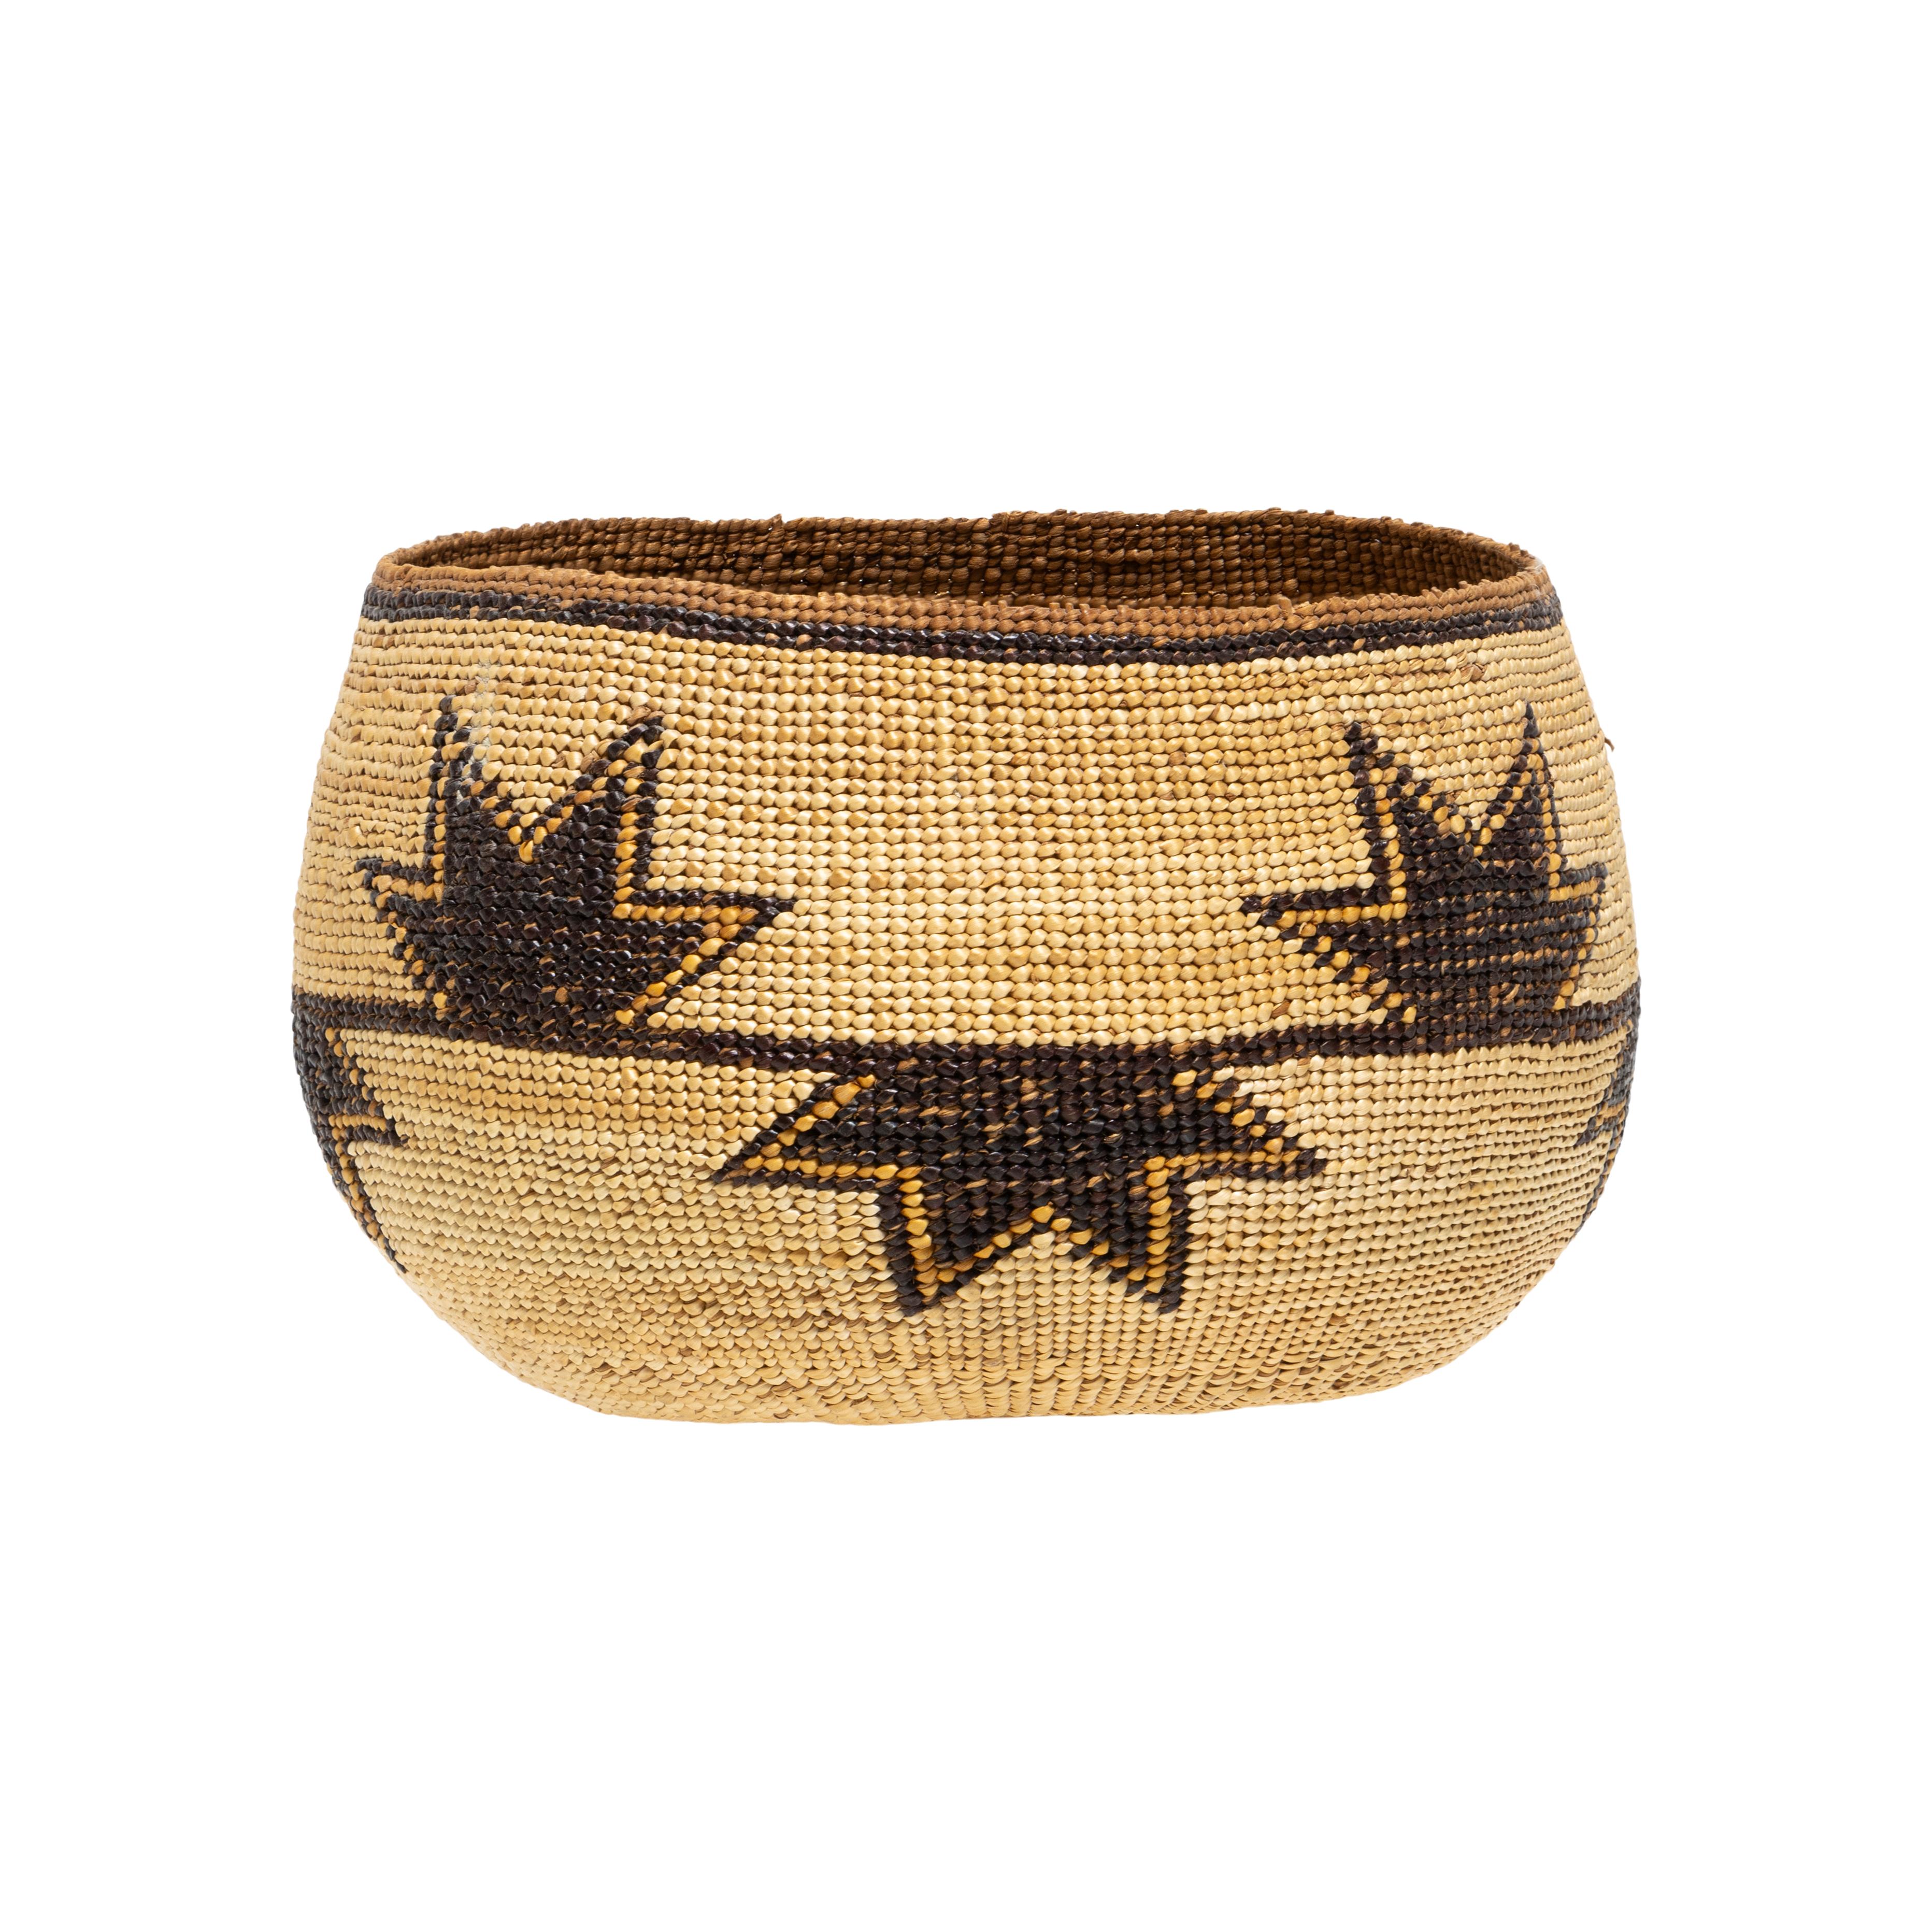 Native American Hupa/Yurok Polychrome Basket For Sale